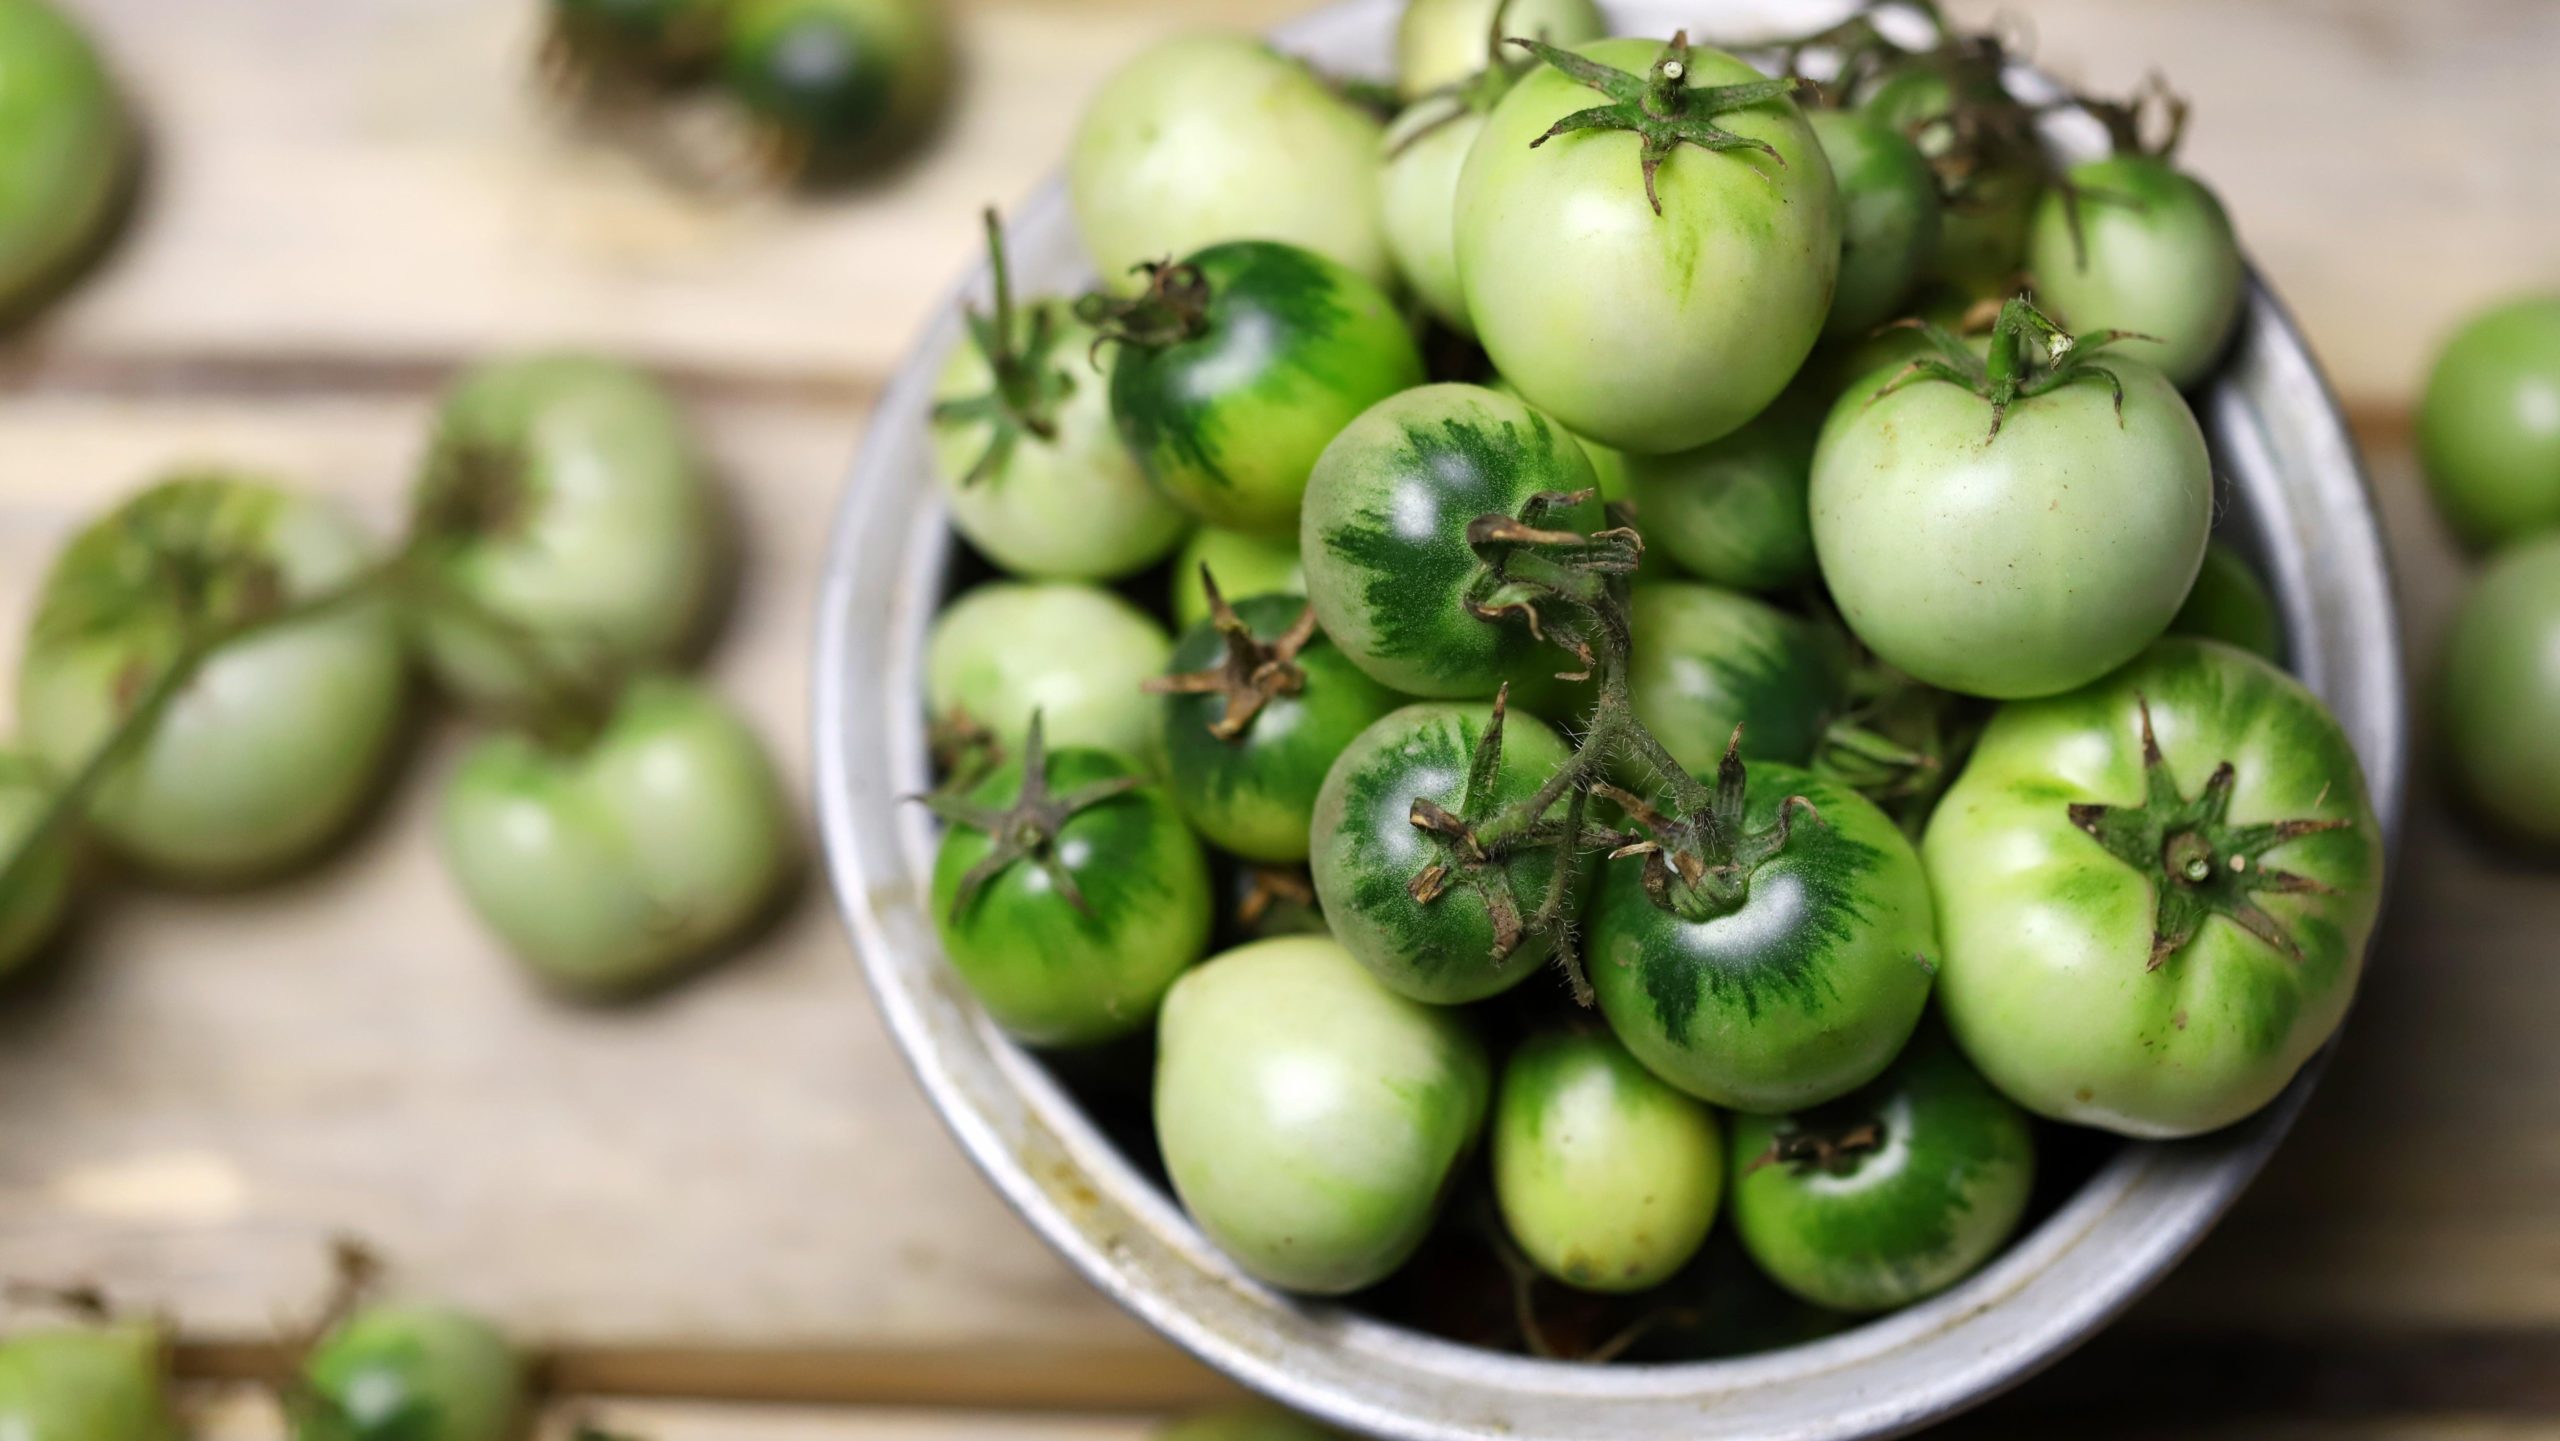 7 Ways to Use Up Pesky Late-Season Green Tomatoes